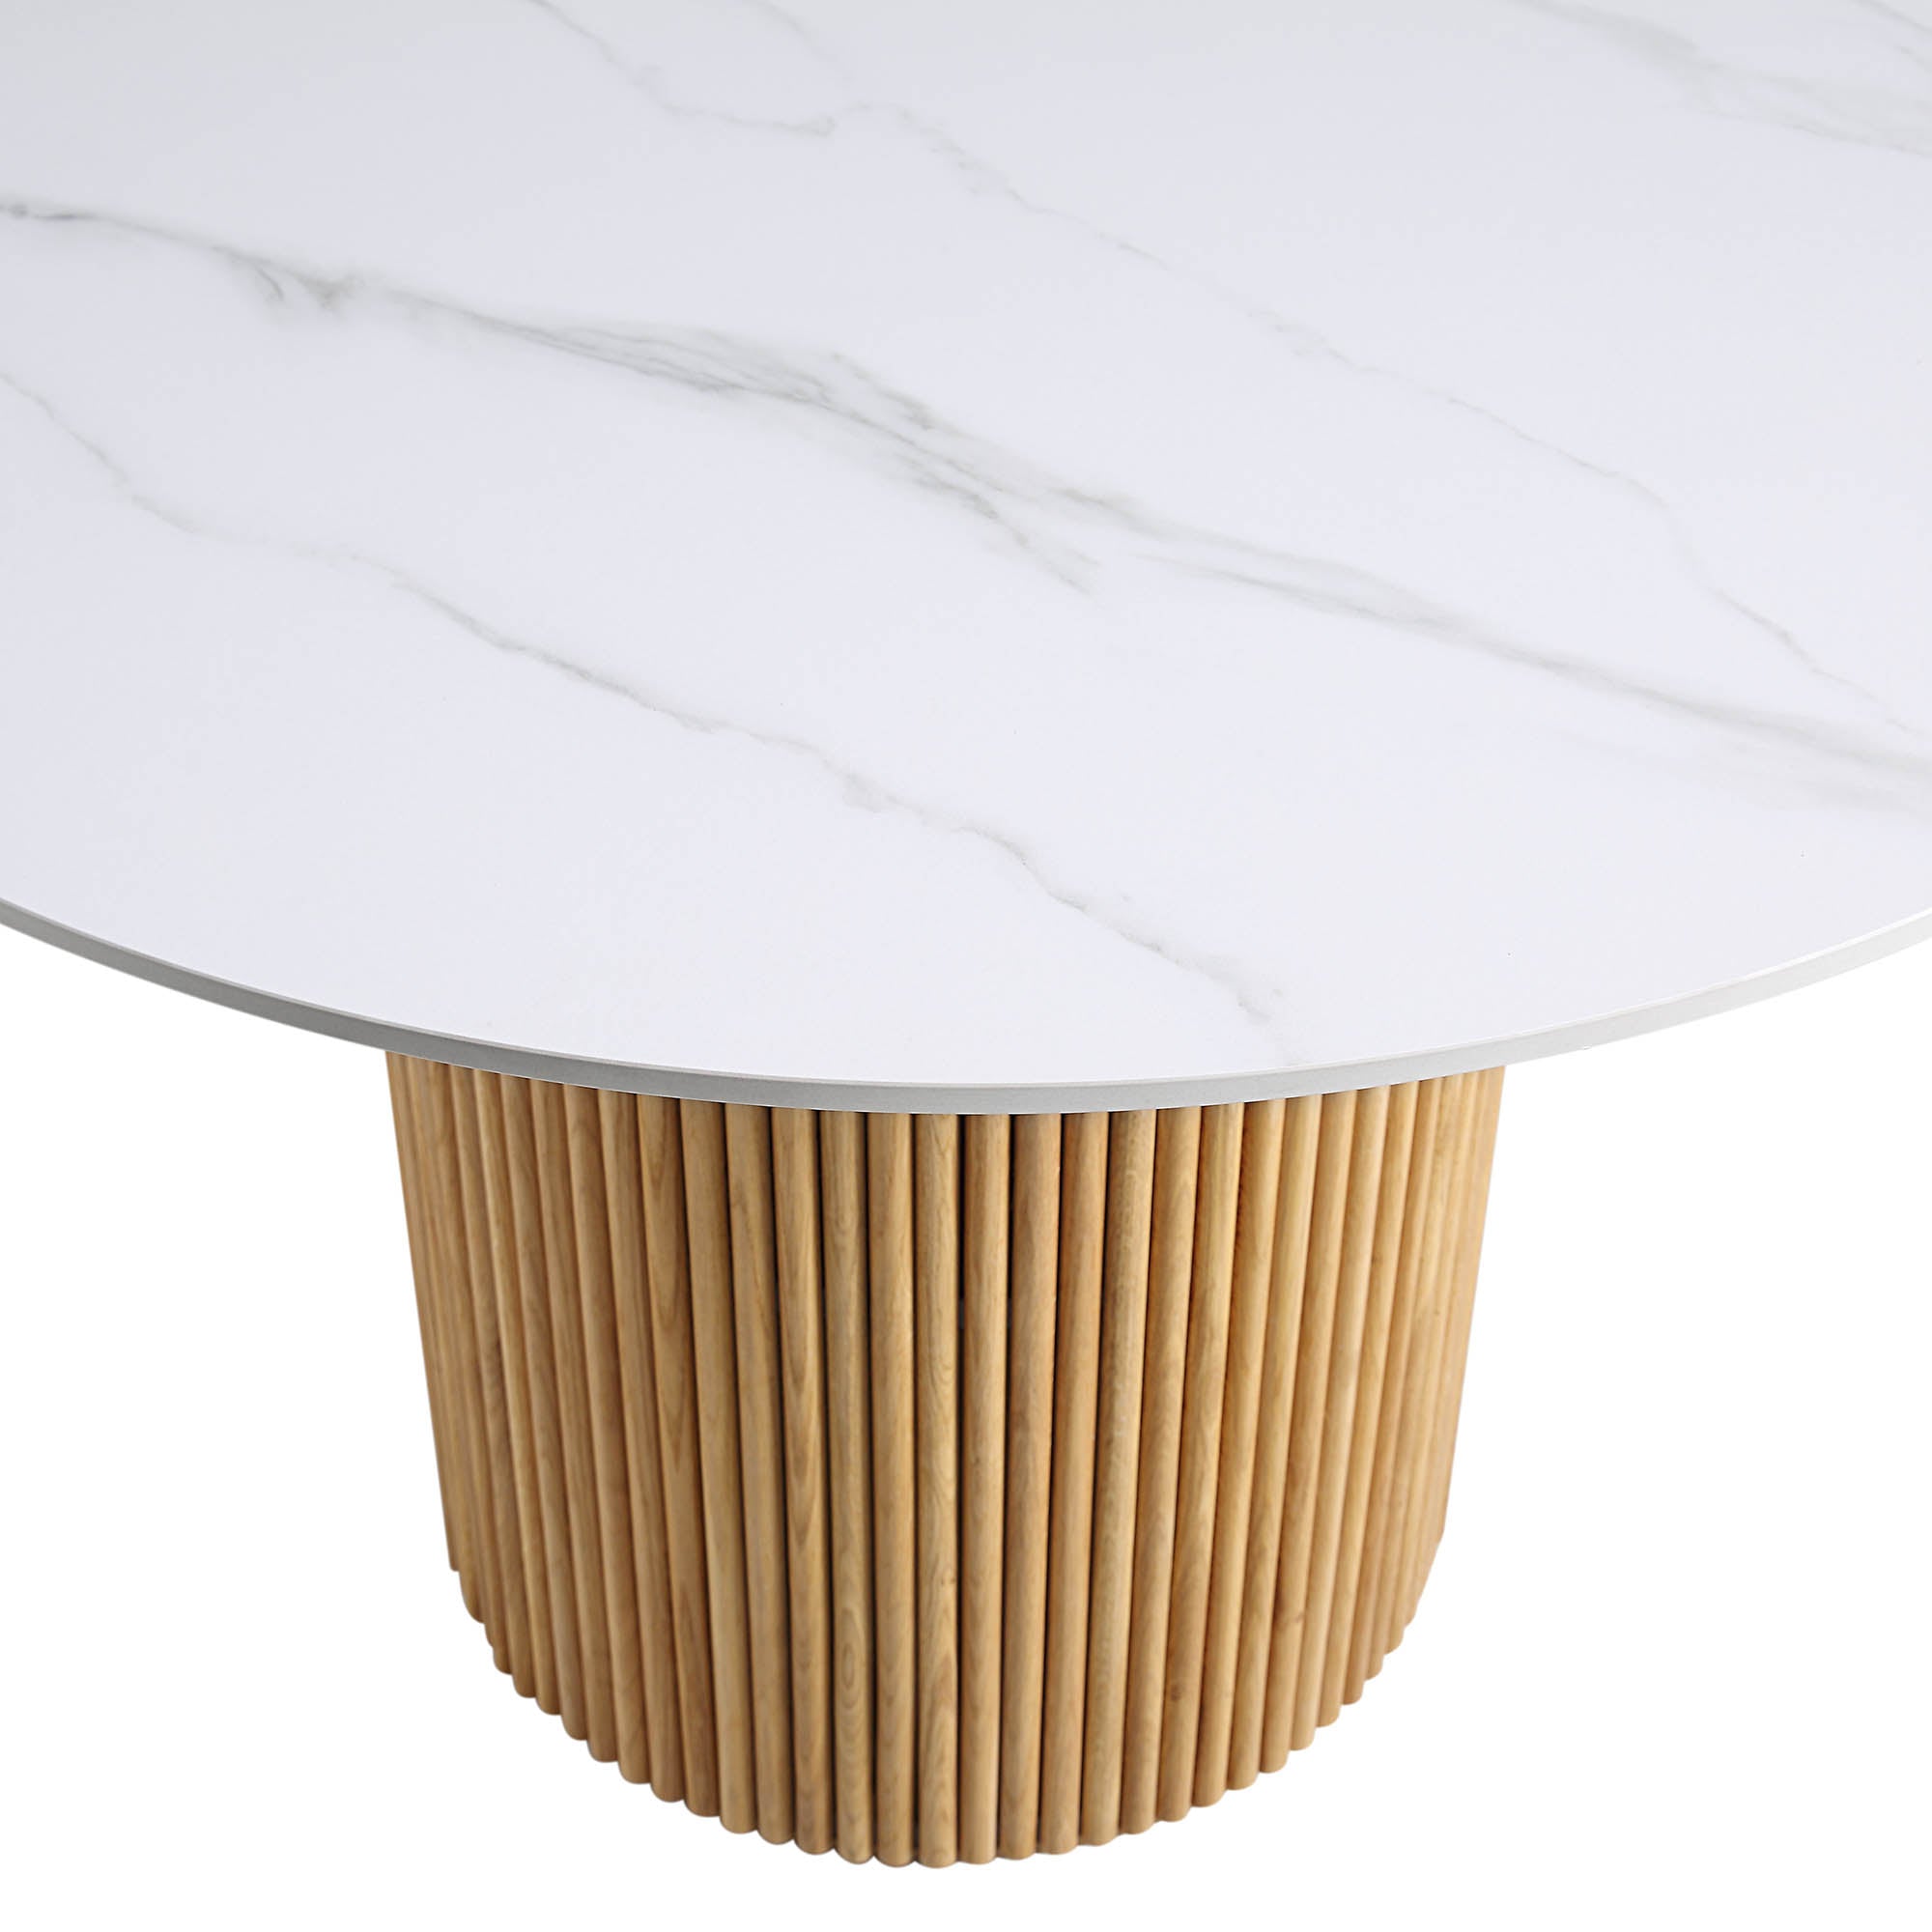 Maru Ceramic Top Oak Pedestal Round Dining Table